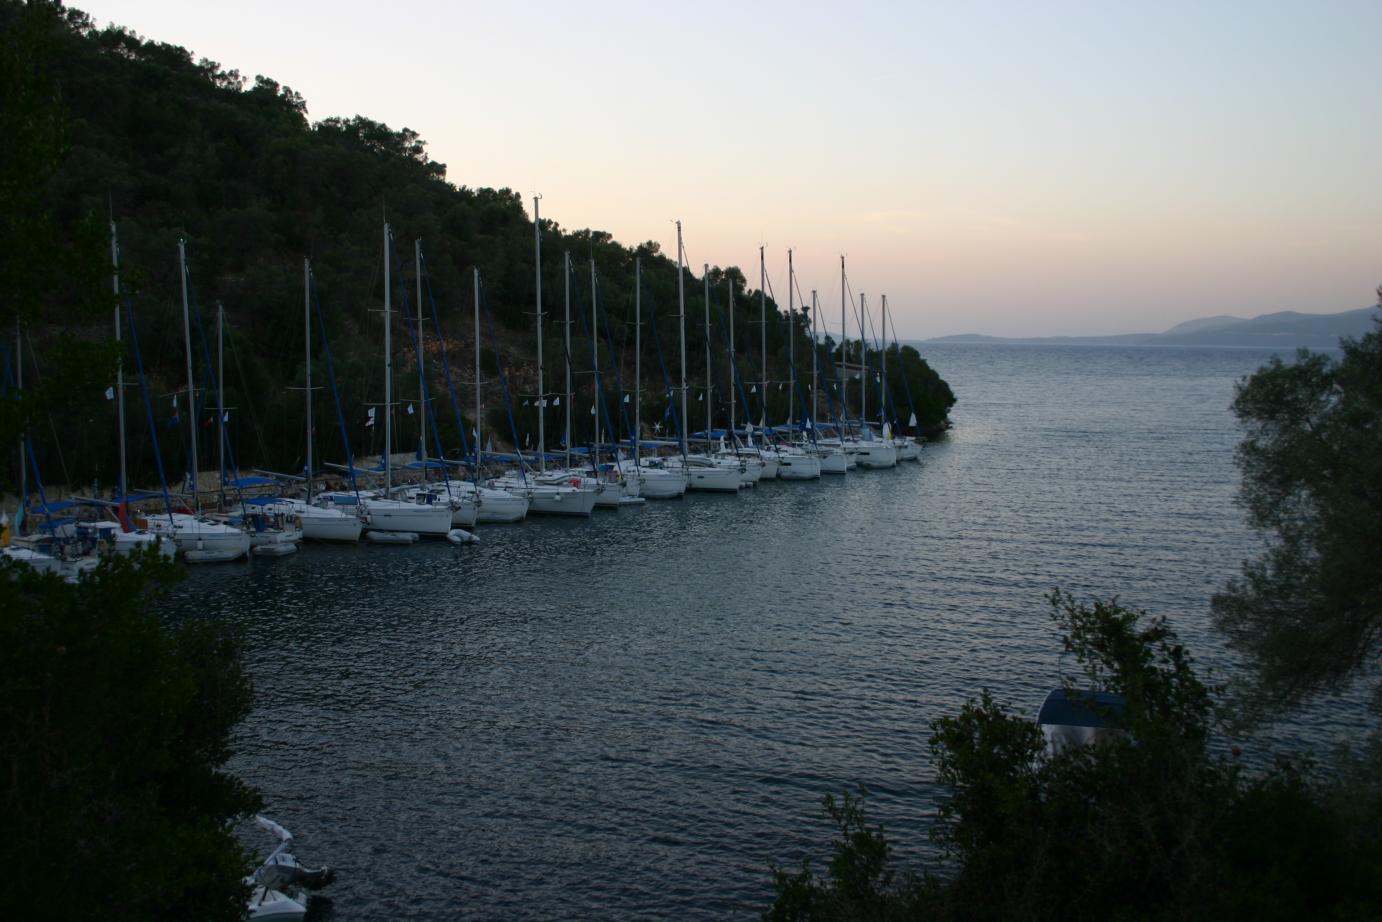 Thursday evening, 17th September, the flotilla moored at Vathi, Meganisi.